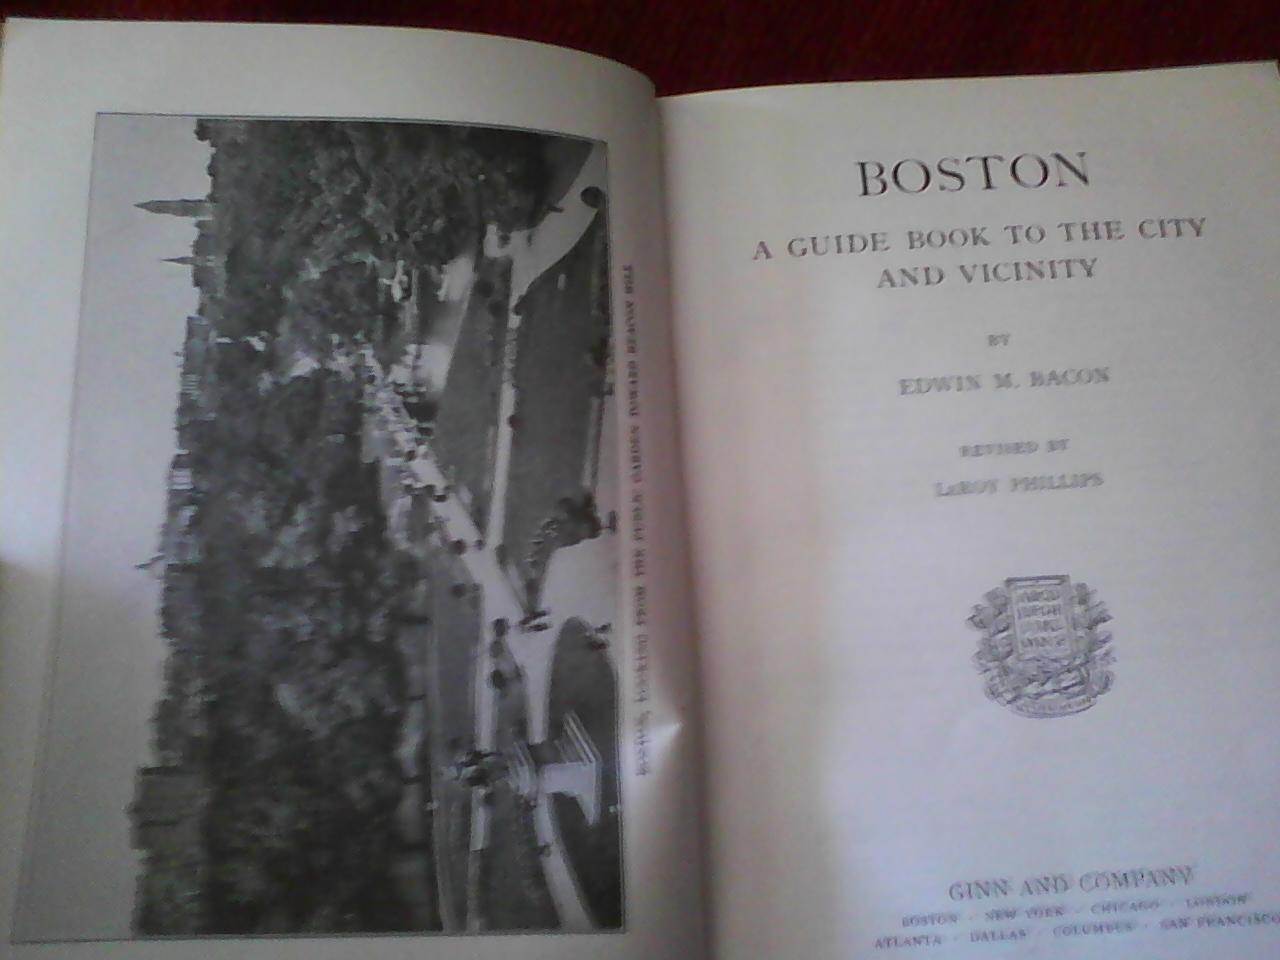 BostonGuideBooks 04